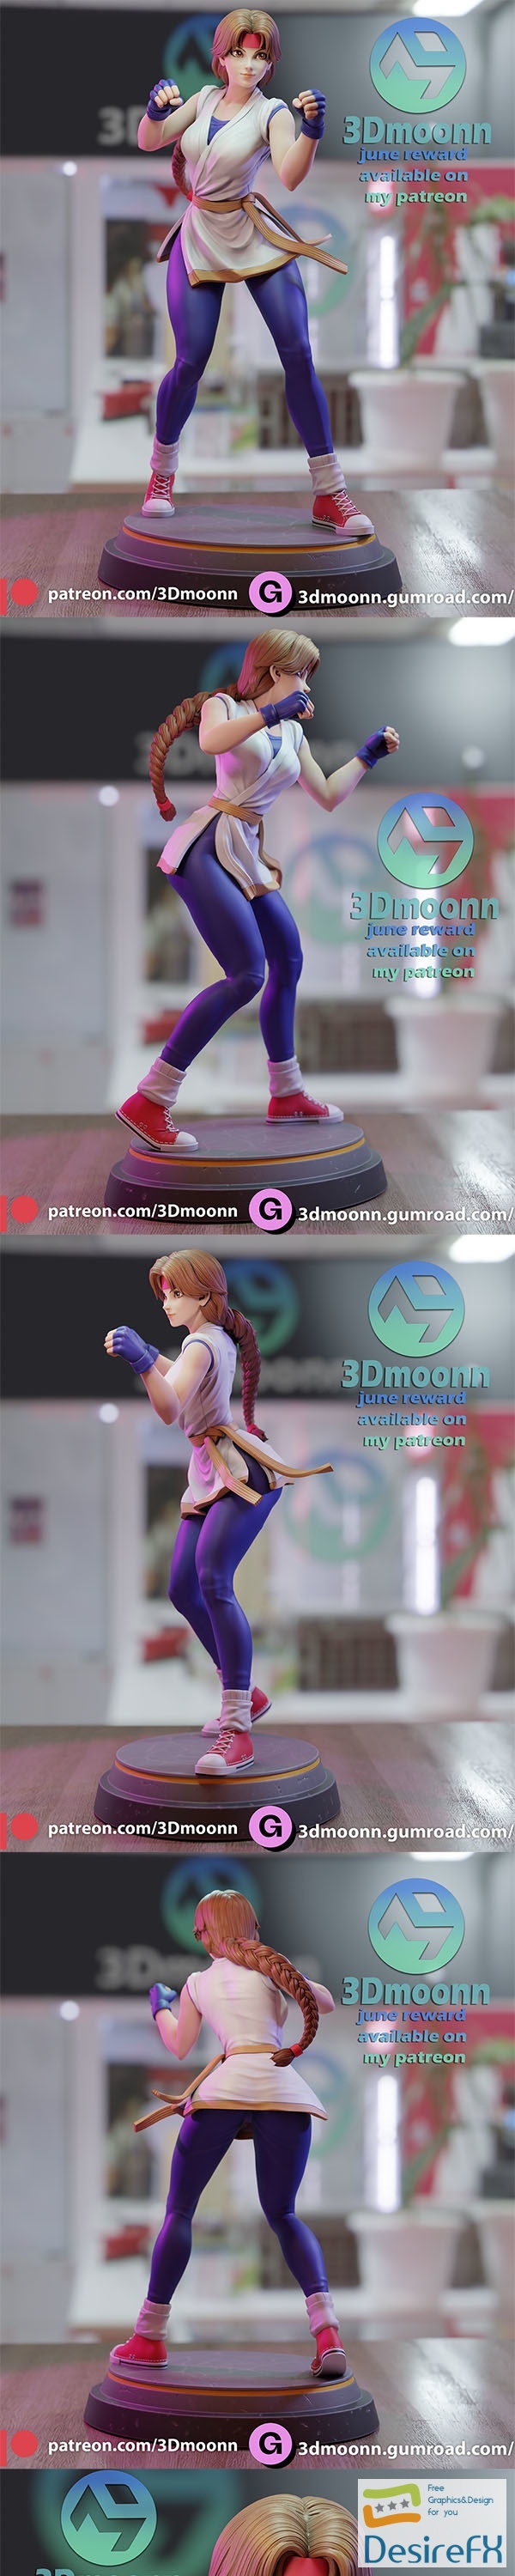 3Dmoonn – Yuri – 3D Print